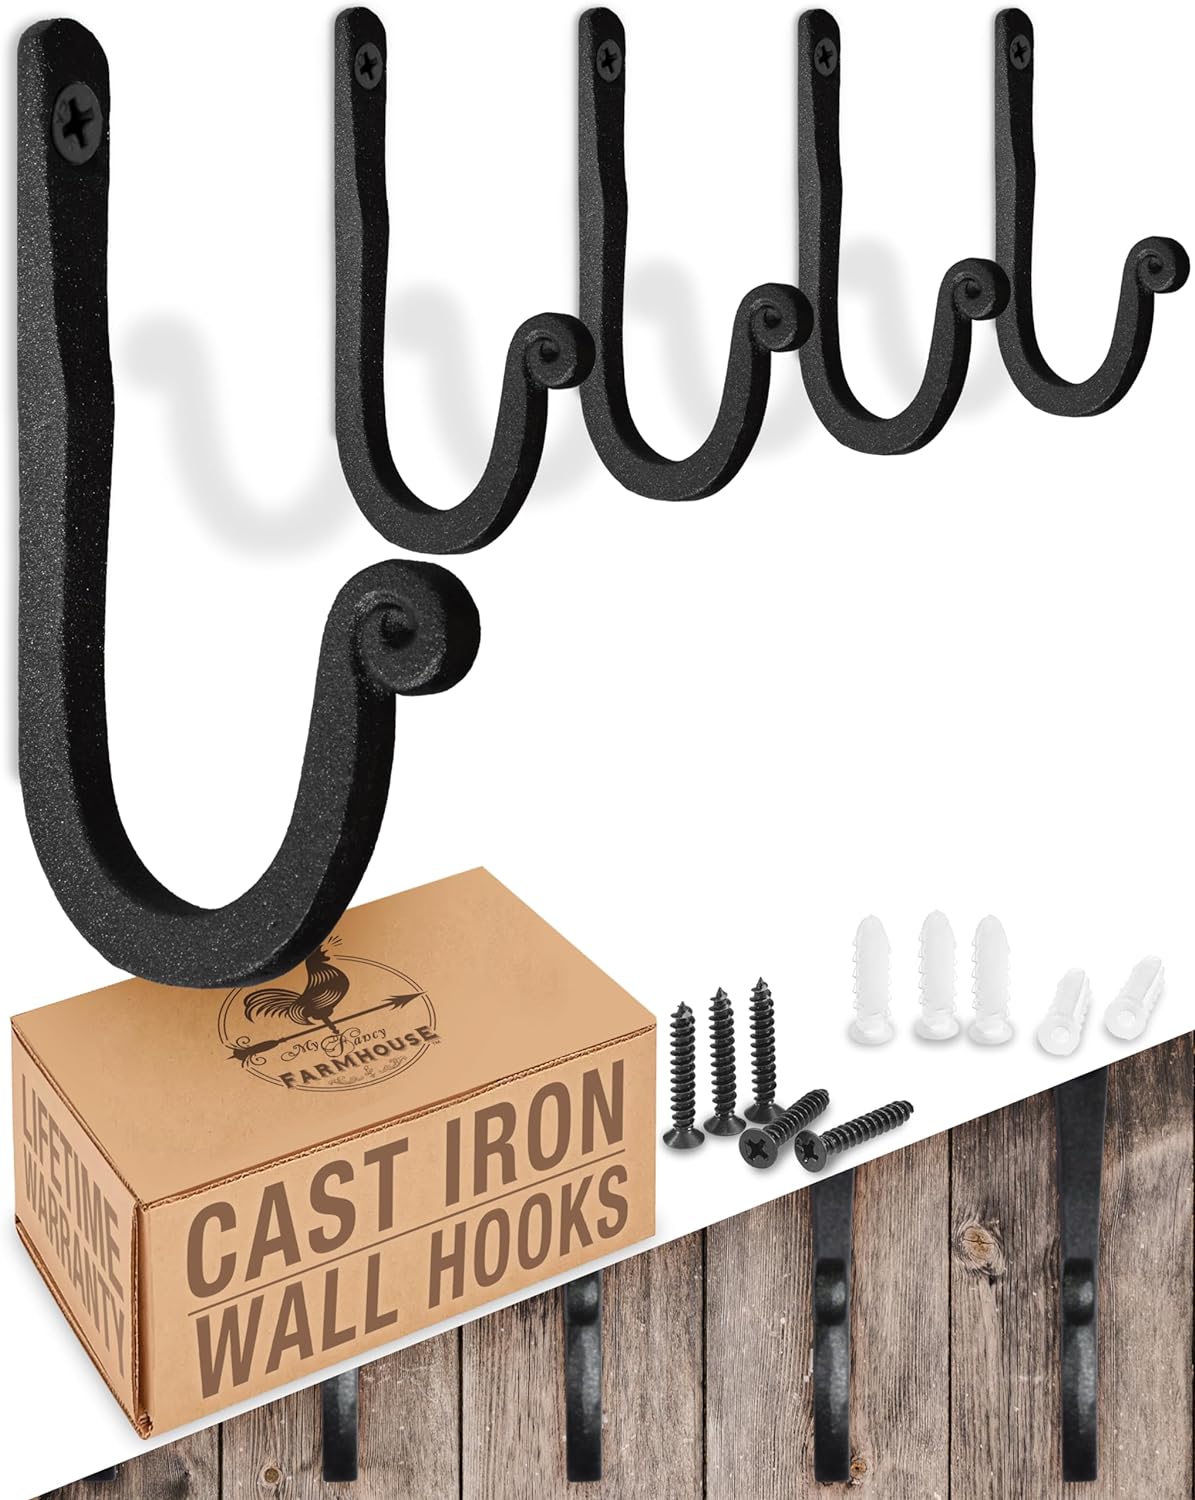 Larger Railroad Spike Cast Iron Hooks Handmade Blacksmith, Wall Mounted, Farmhouse Decor Cast Iron Wall Hooks, Vintage Hooks for Hanging